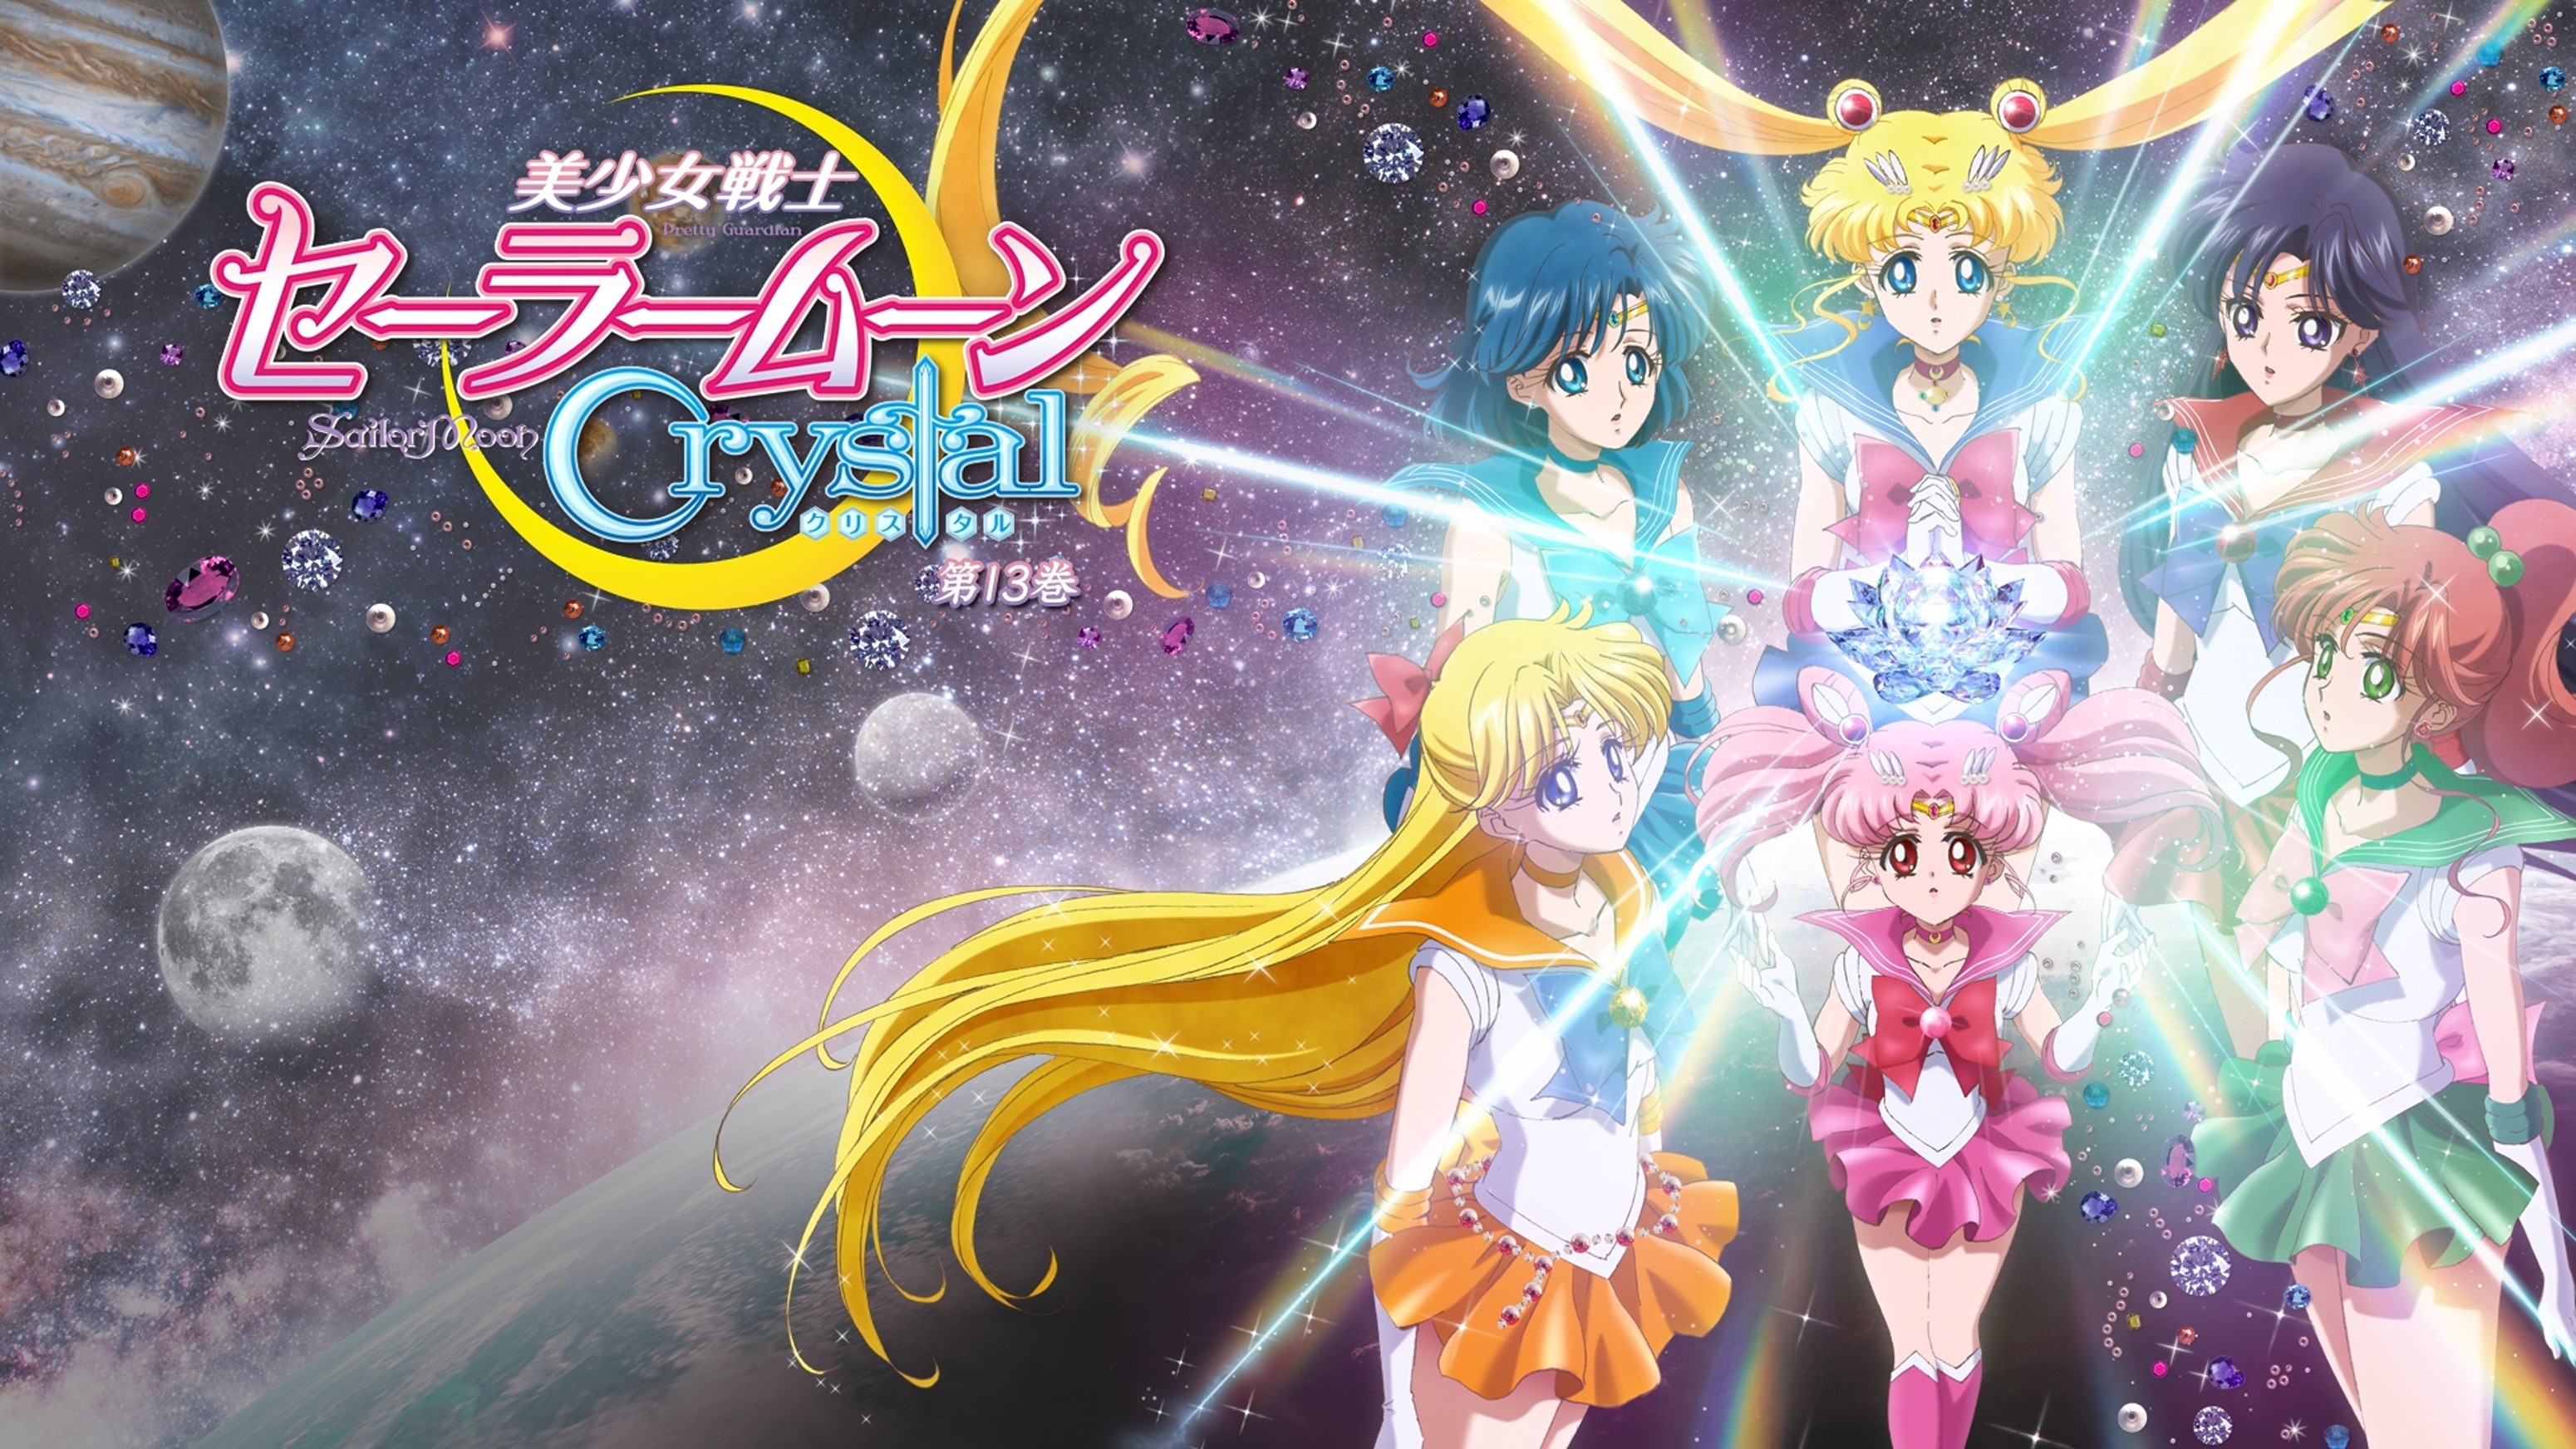 Sailor Moon Crystal Wallpaper 006881 1920x1080 wallpaper  1920x1080   1335841  WallpaperUP